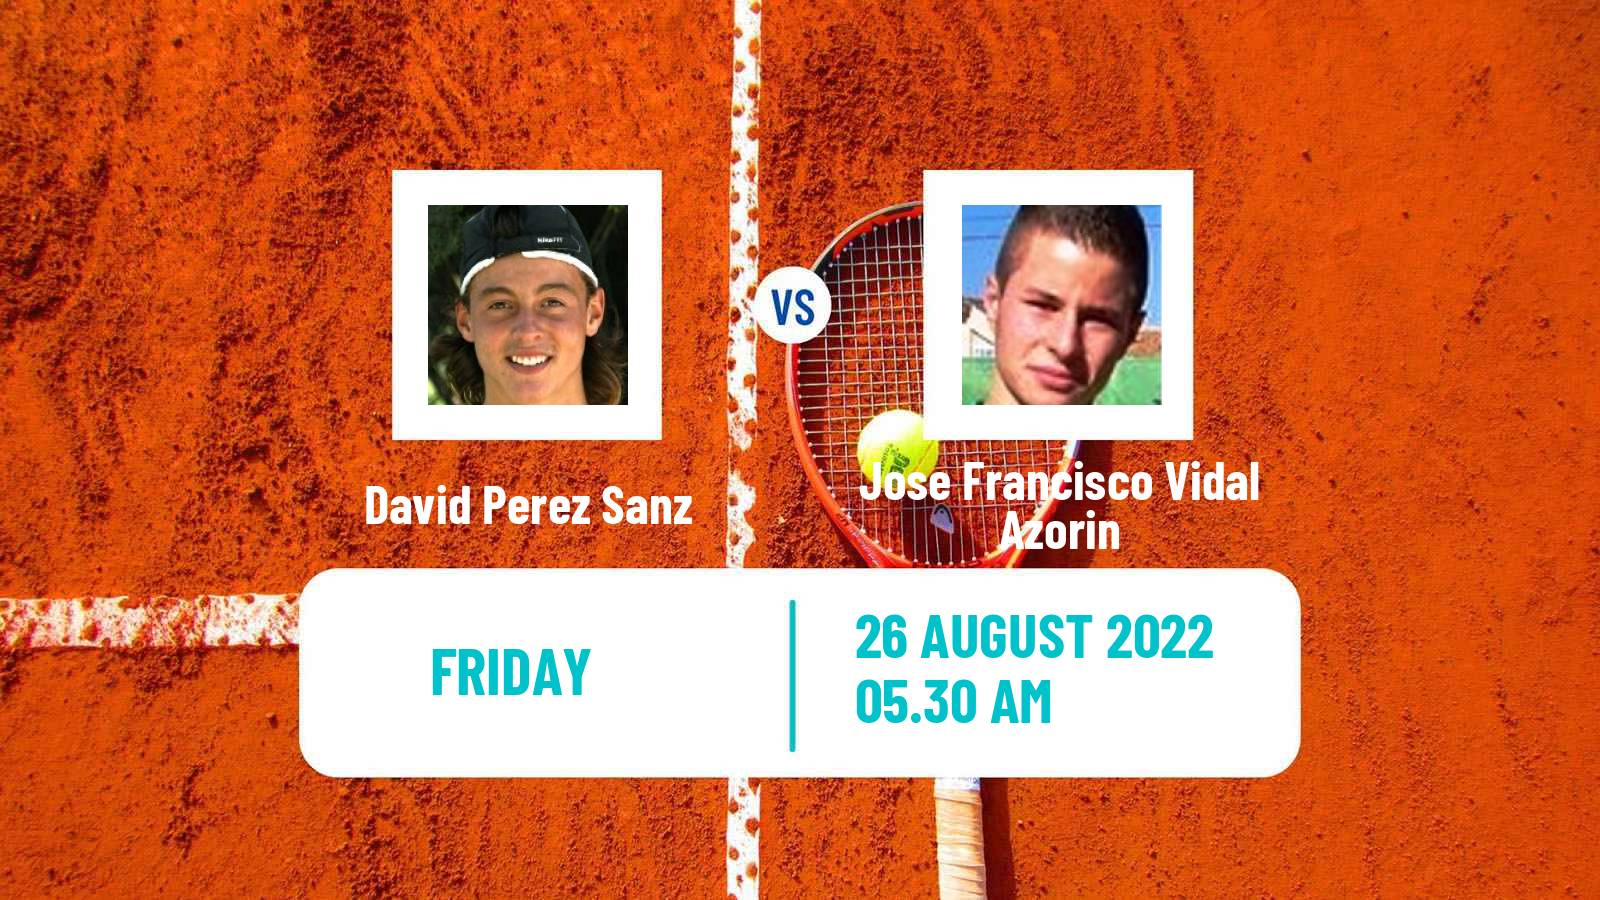 Tennis ITF Tournaments David Perez Sanz - Jose Francisco Vidal Azorin